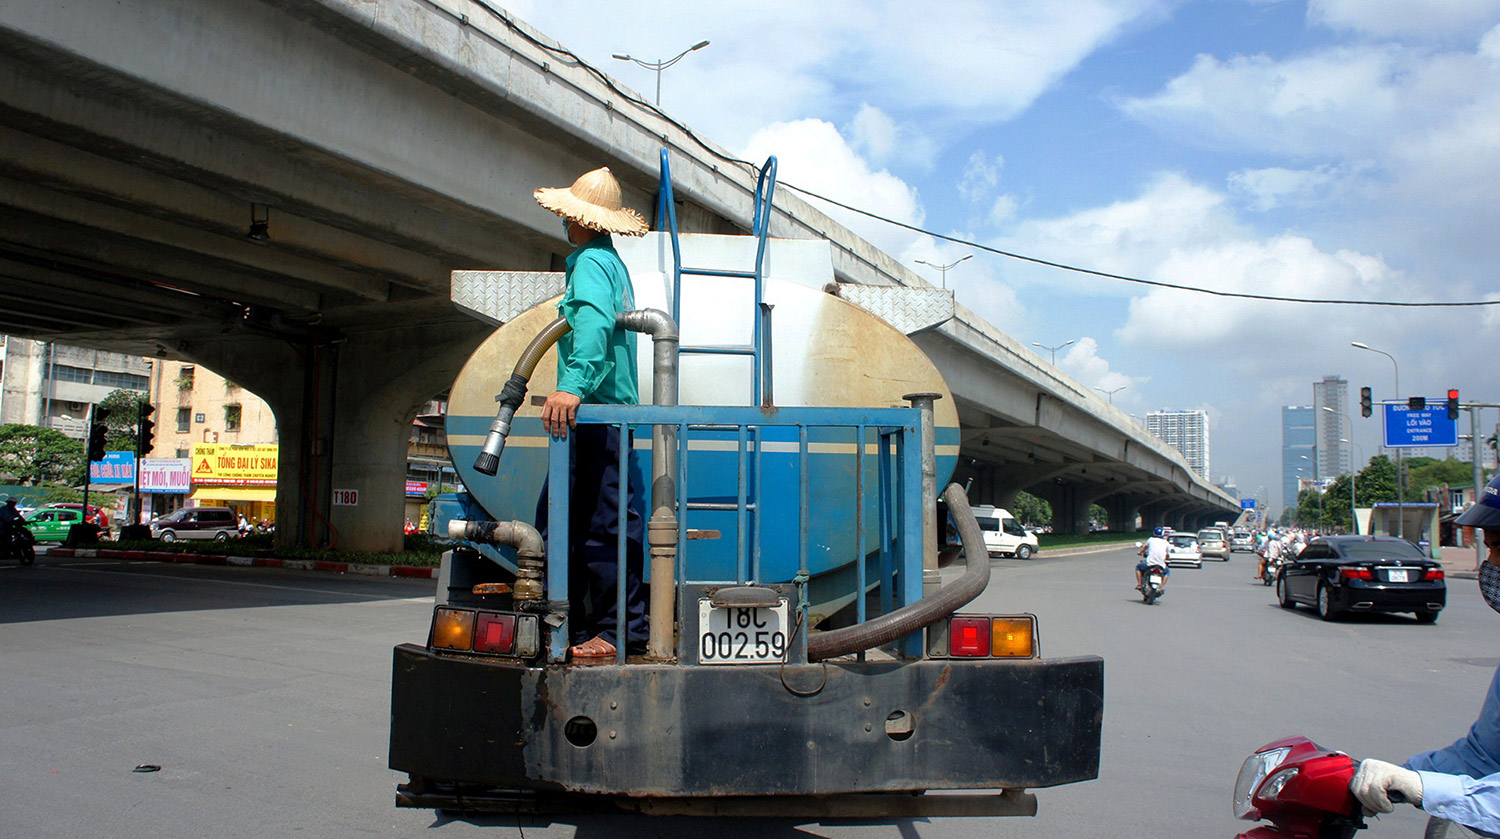 How Urban Typologies Shape Inequalities in Water Access in Hanoi